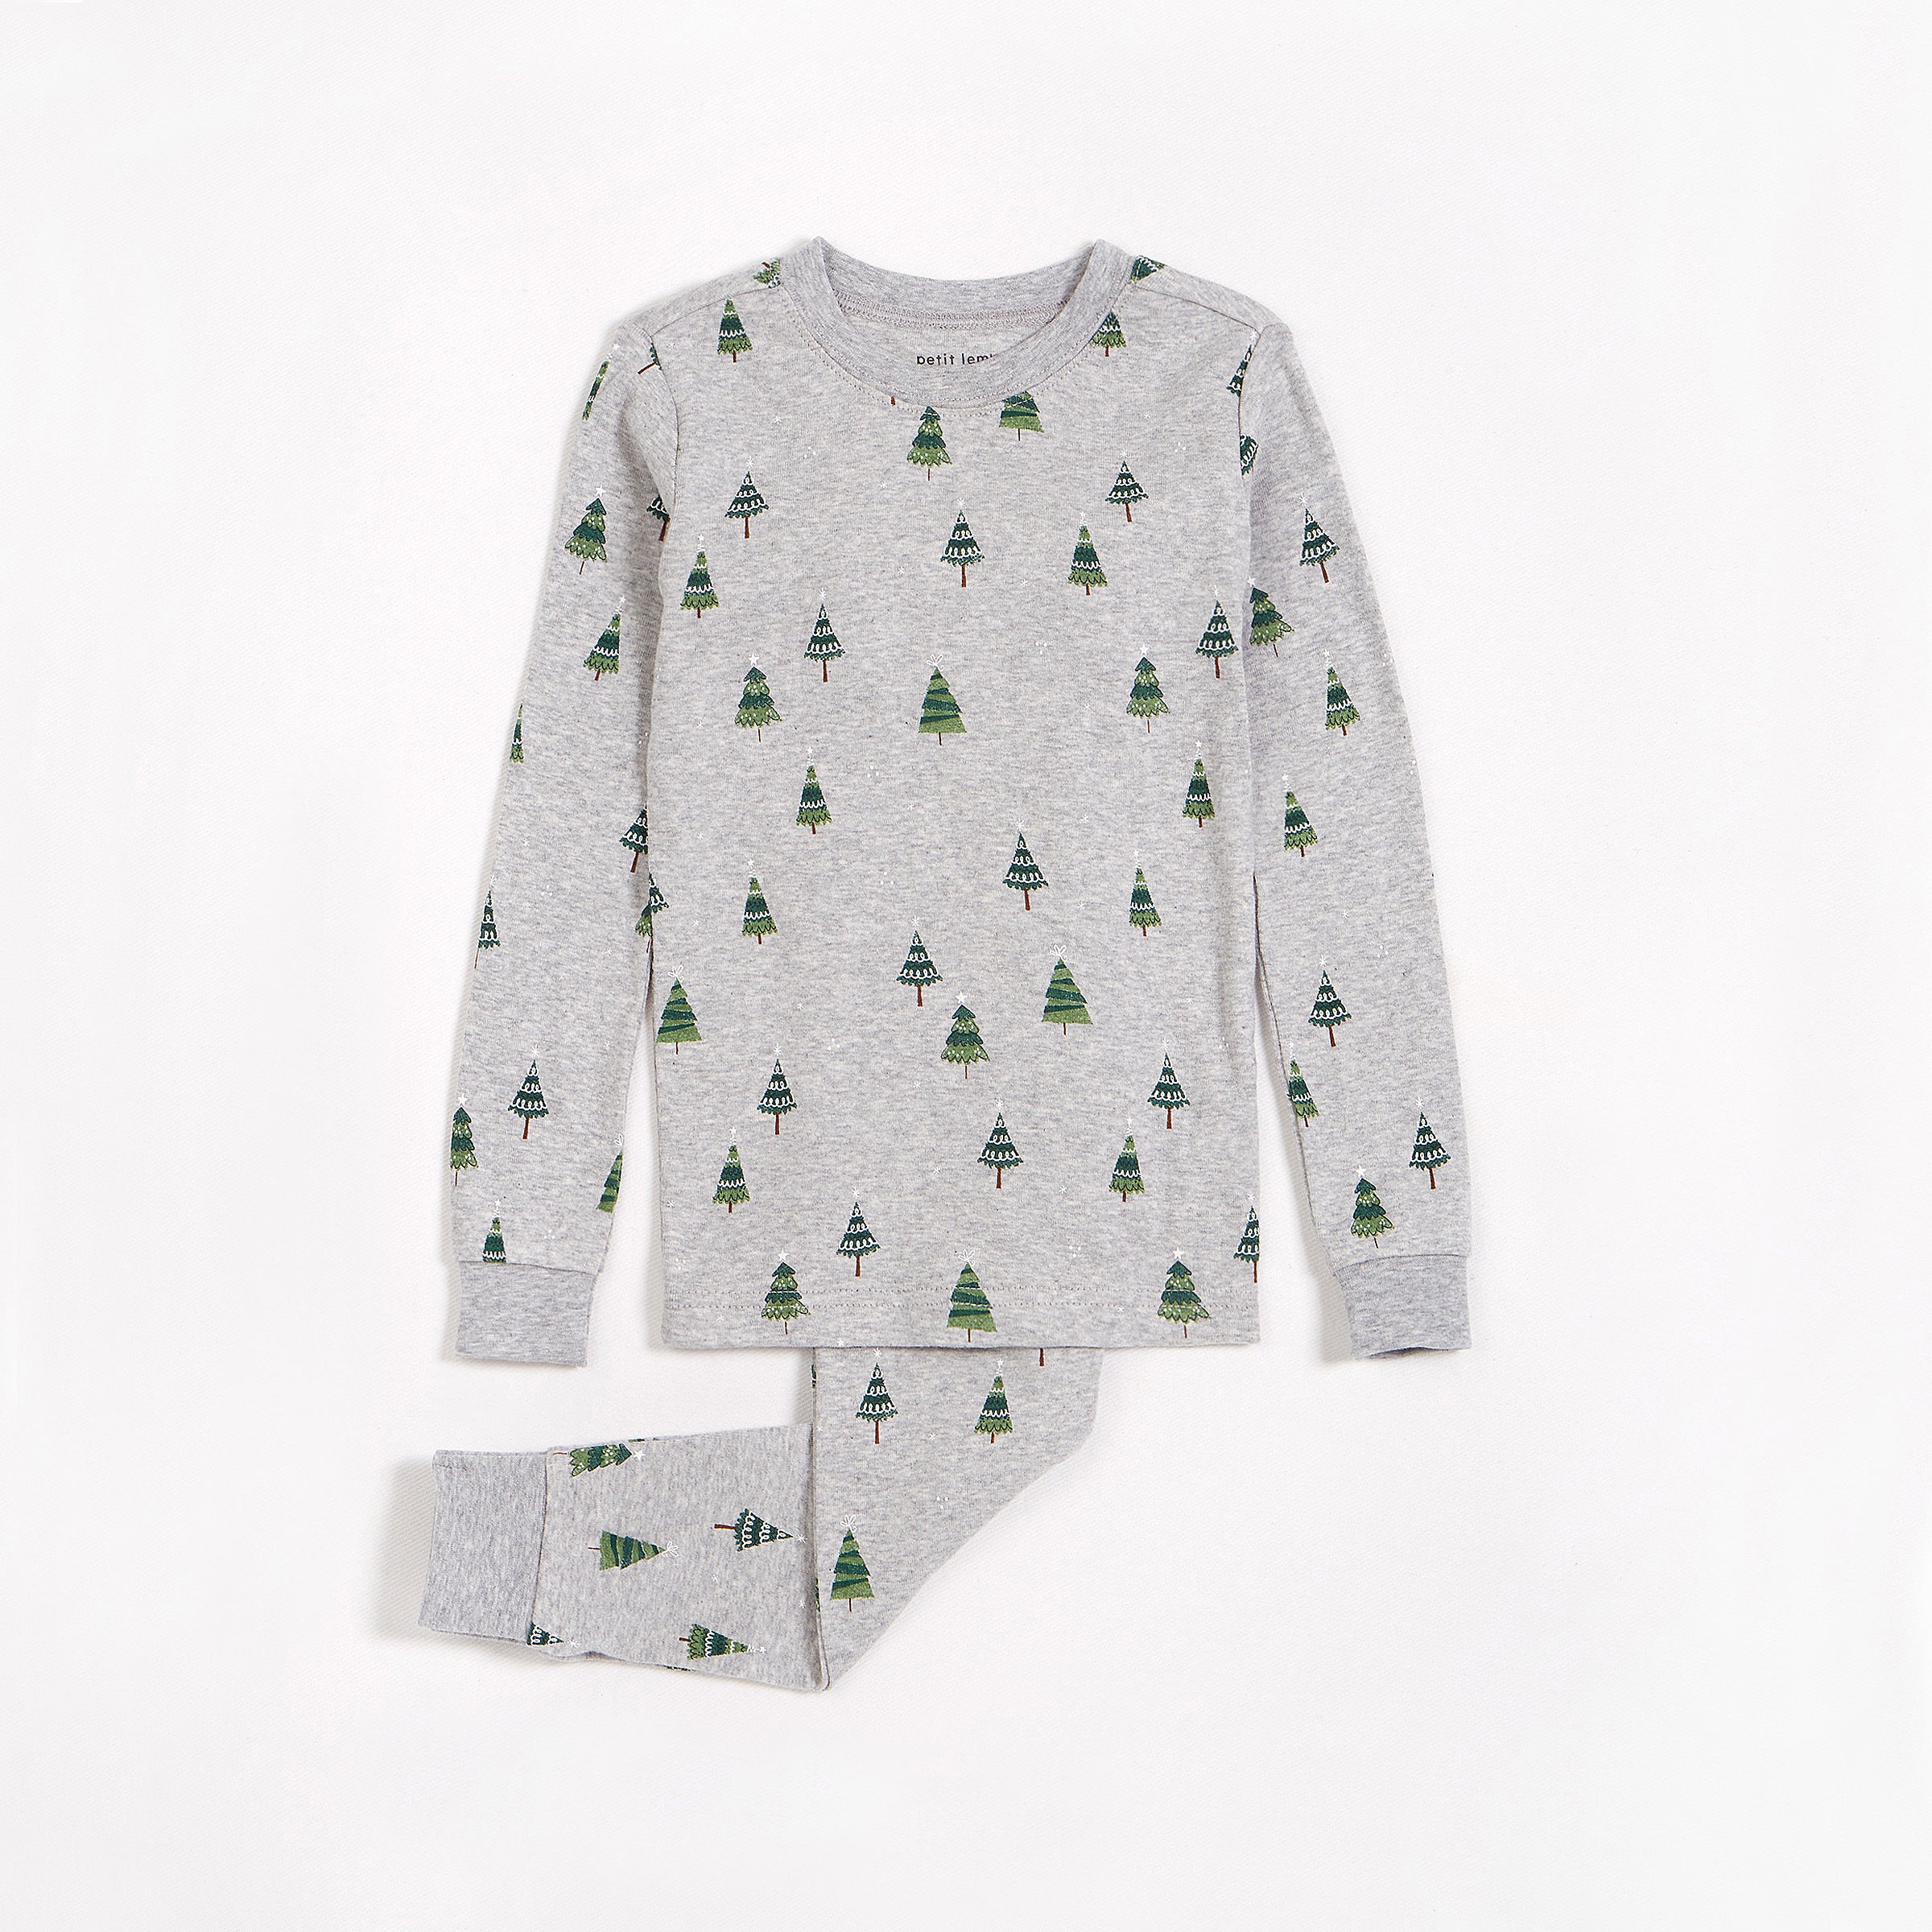 O Christmas Tree Print on Heather Grey PJ Set